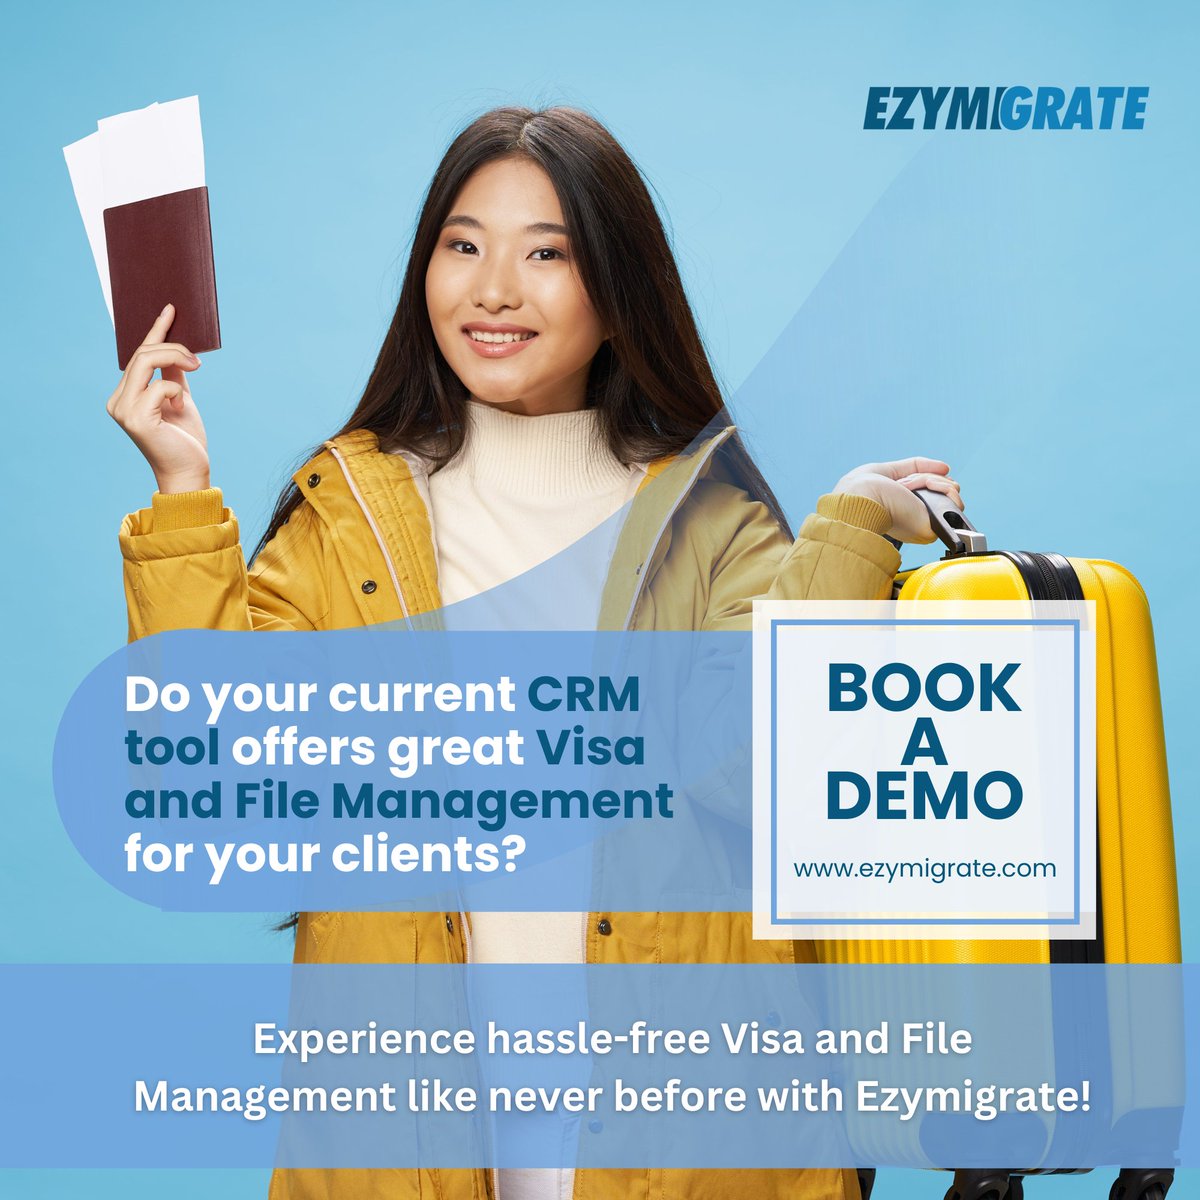 ✅ Say goodbye to cumbersome visa and file handling.

Visit: ezymigrate.com

#Ezymigrate #CRM #VisaManagement #FileManagement #ClientSatisfaction #bestcrmimmigration #immigrationconsultant #immigration #business #migrate